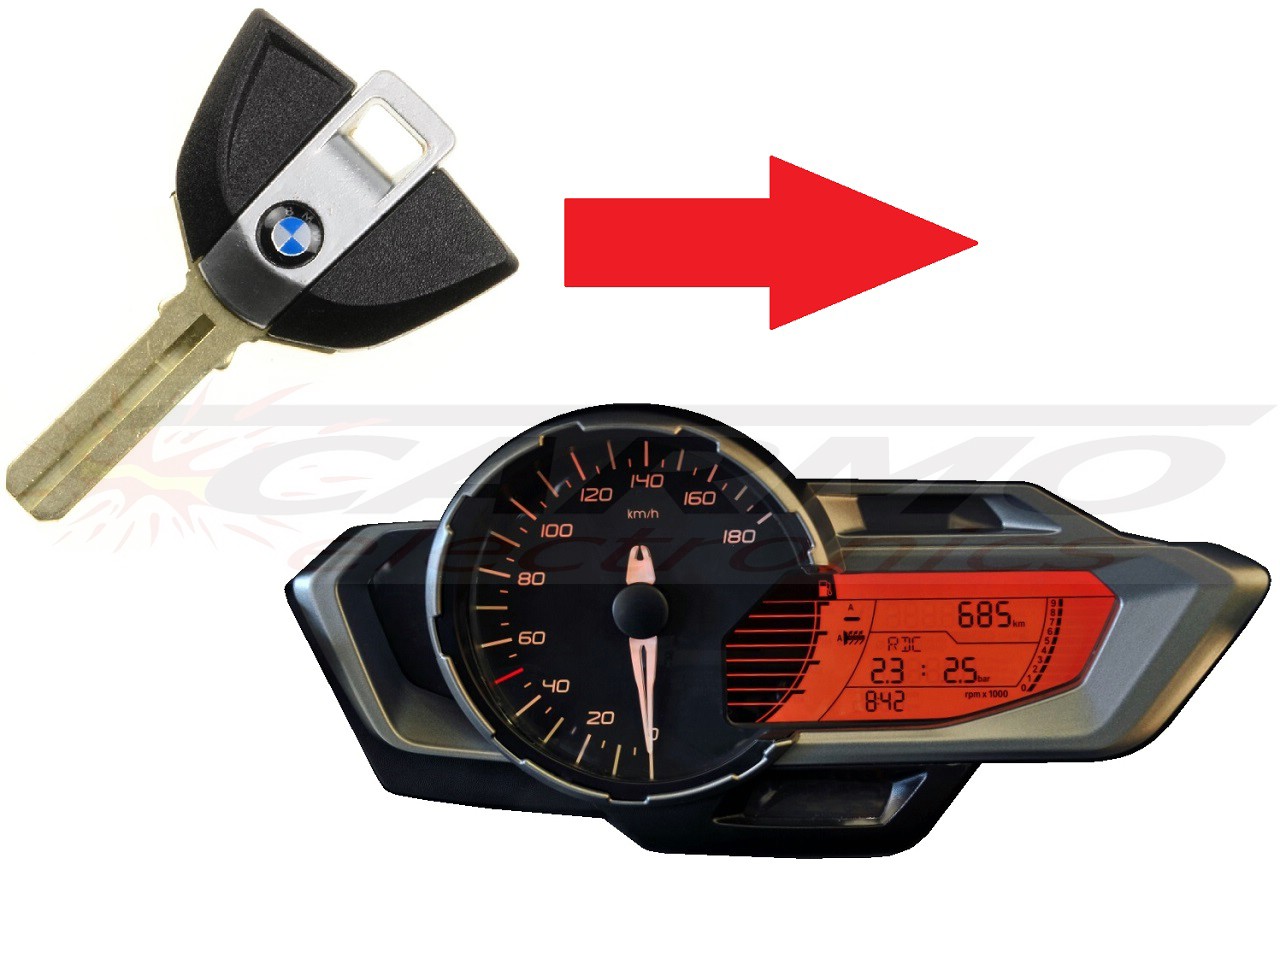 BMW C600 C650 G310 1x chip sleutel programmeren → dashboard - Clique na Imagem para Fechar